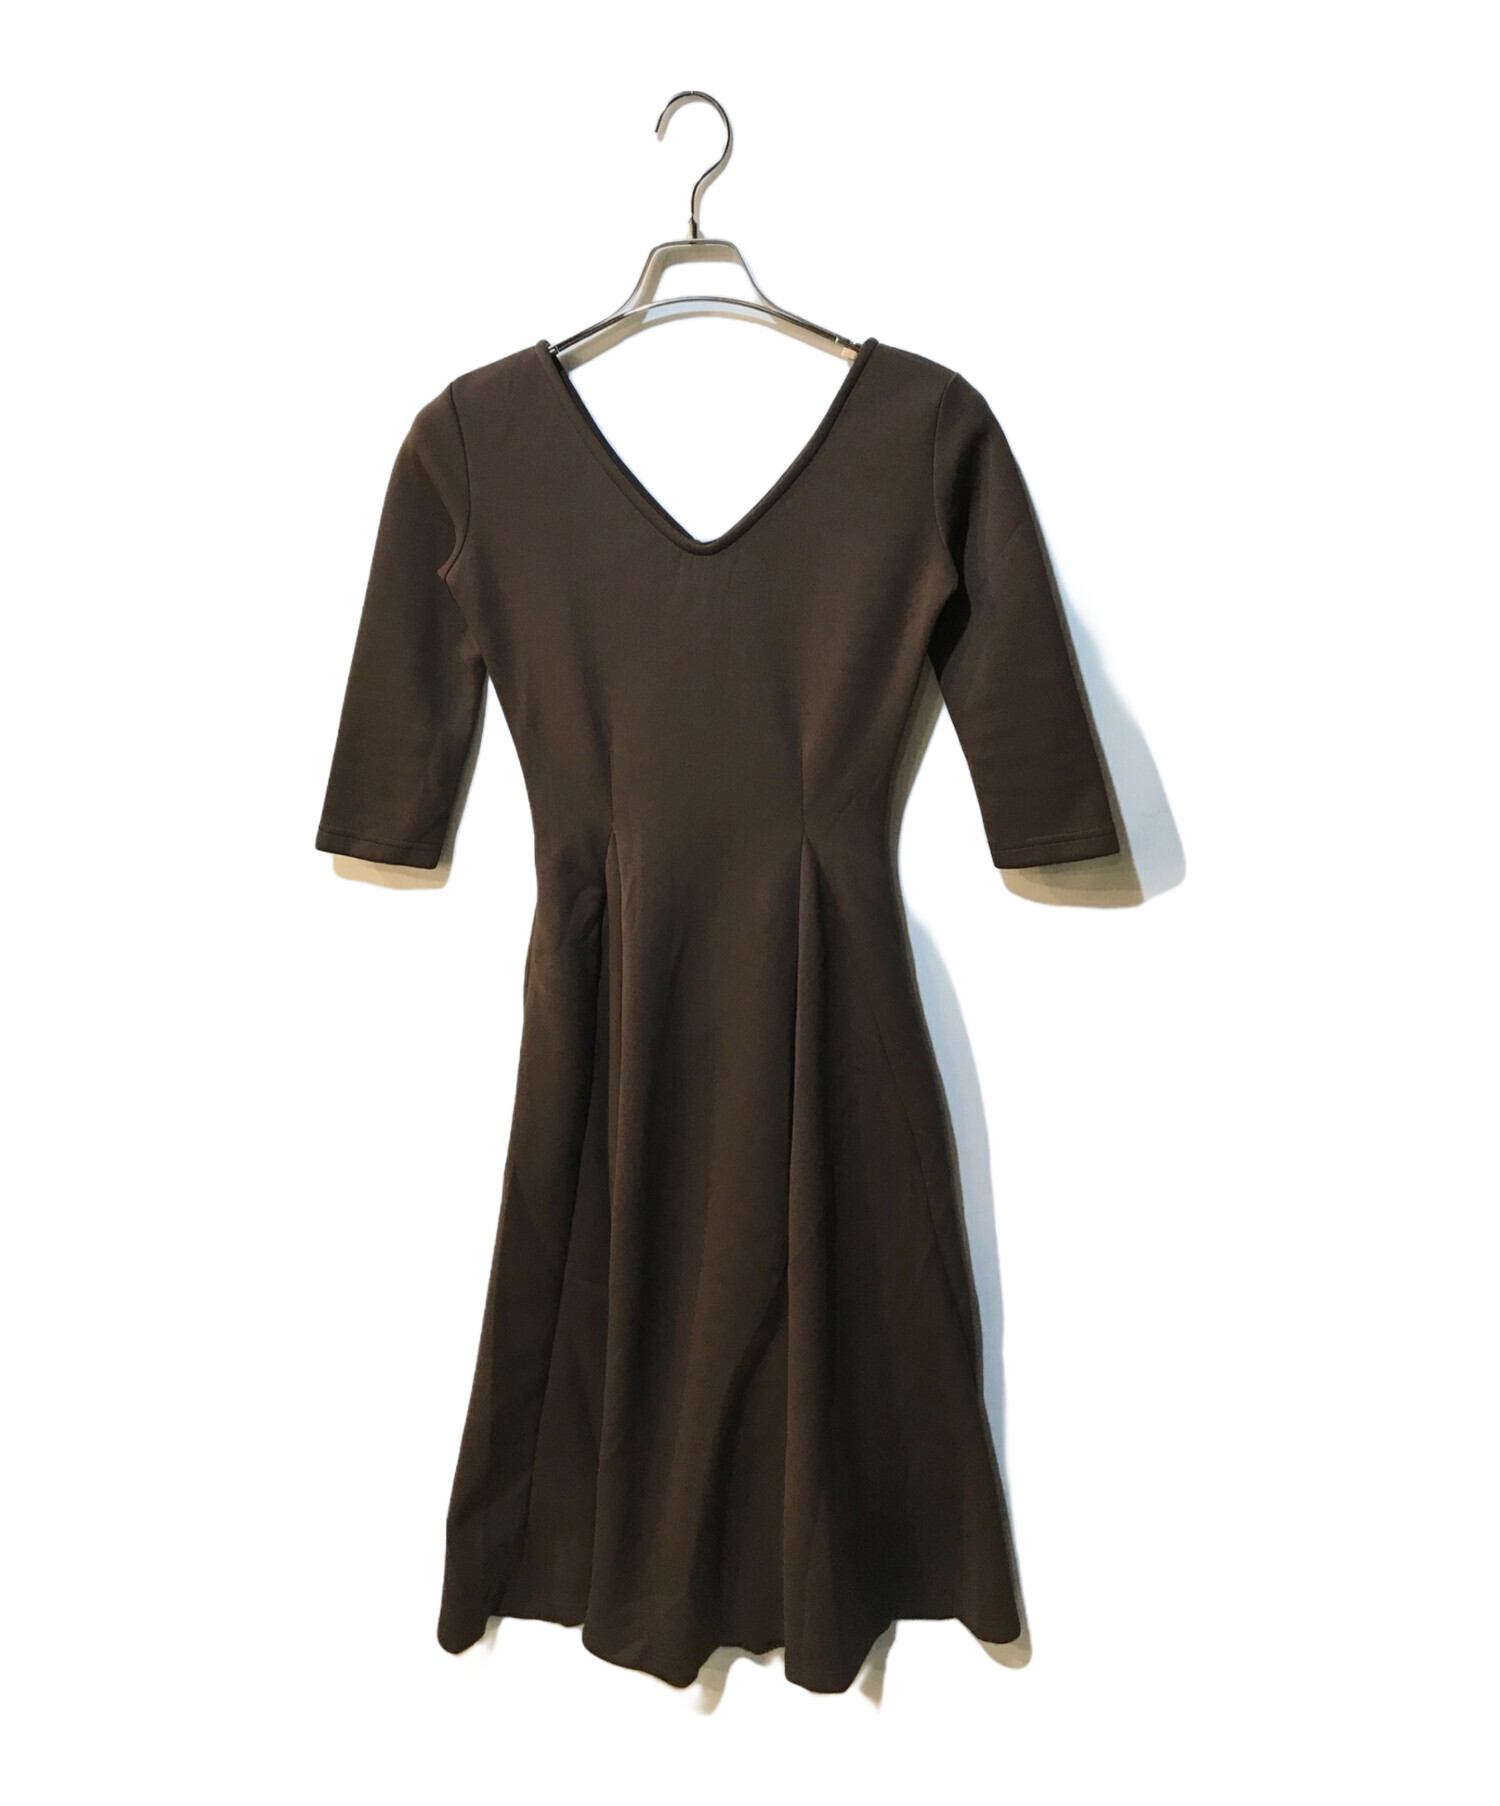 Maison celon (メゾンセロン) celon cropped sleeve v silhouette dress CAR2320 ブラウン  サイズ:S